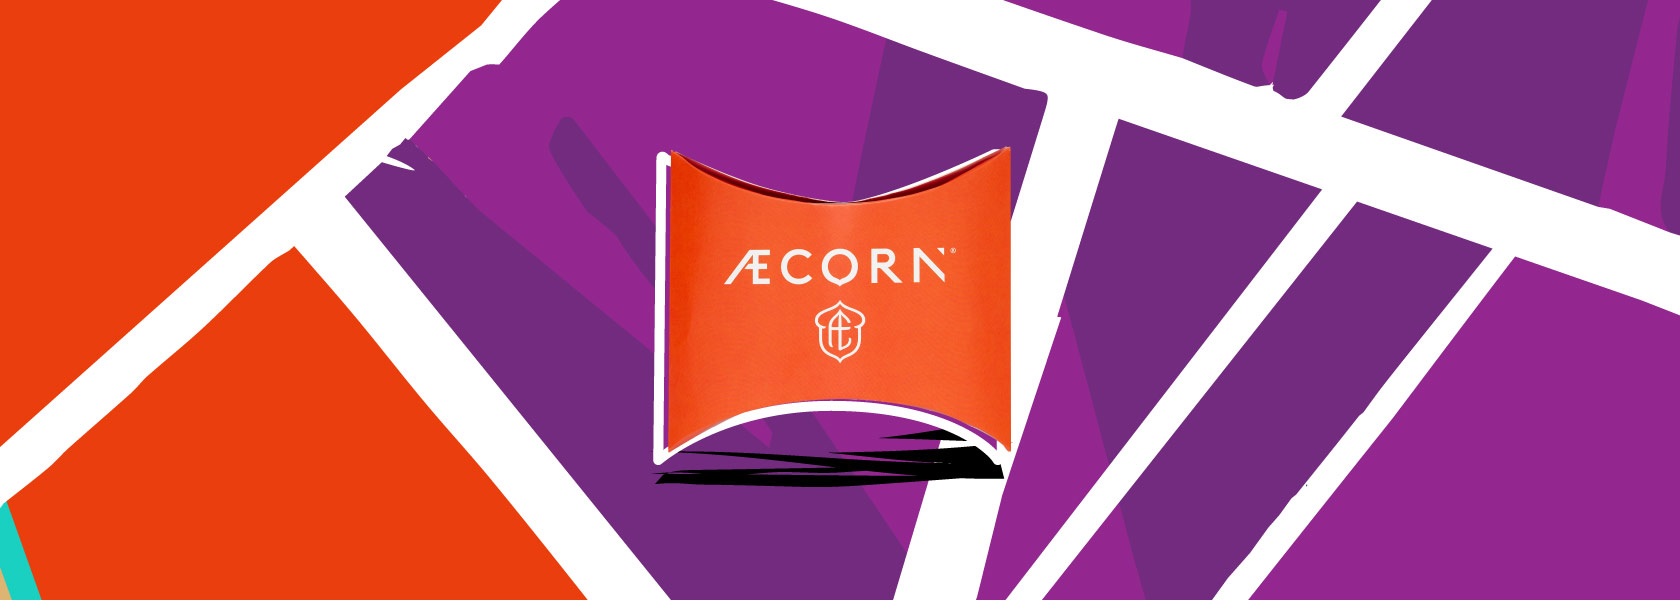 Æcorn Drinks Pillow Boxes Create Quite The Stir - Smurfit Kappa | Saxon Packaging